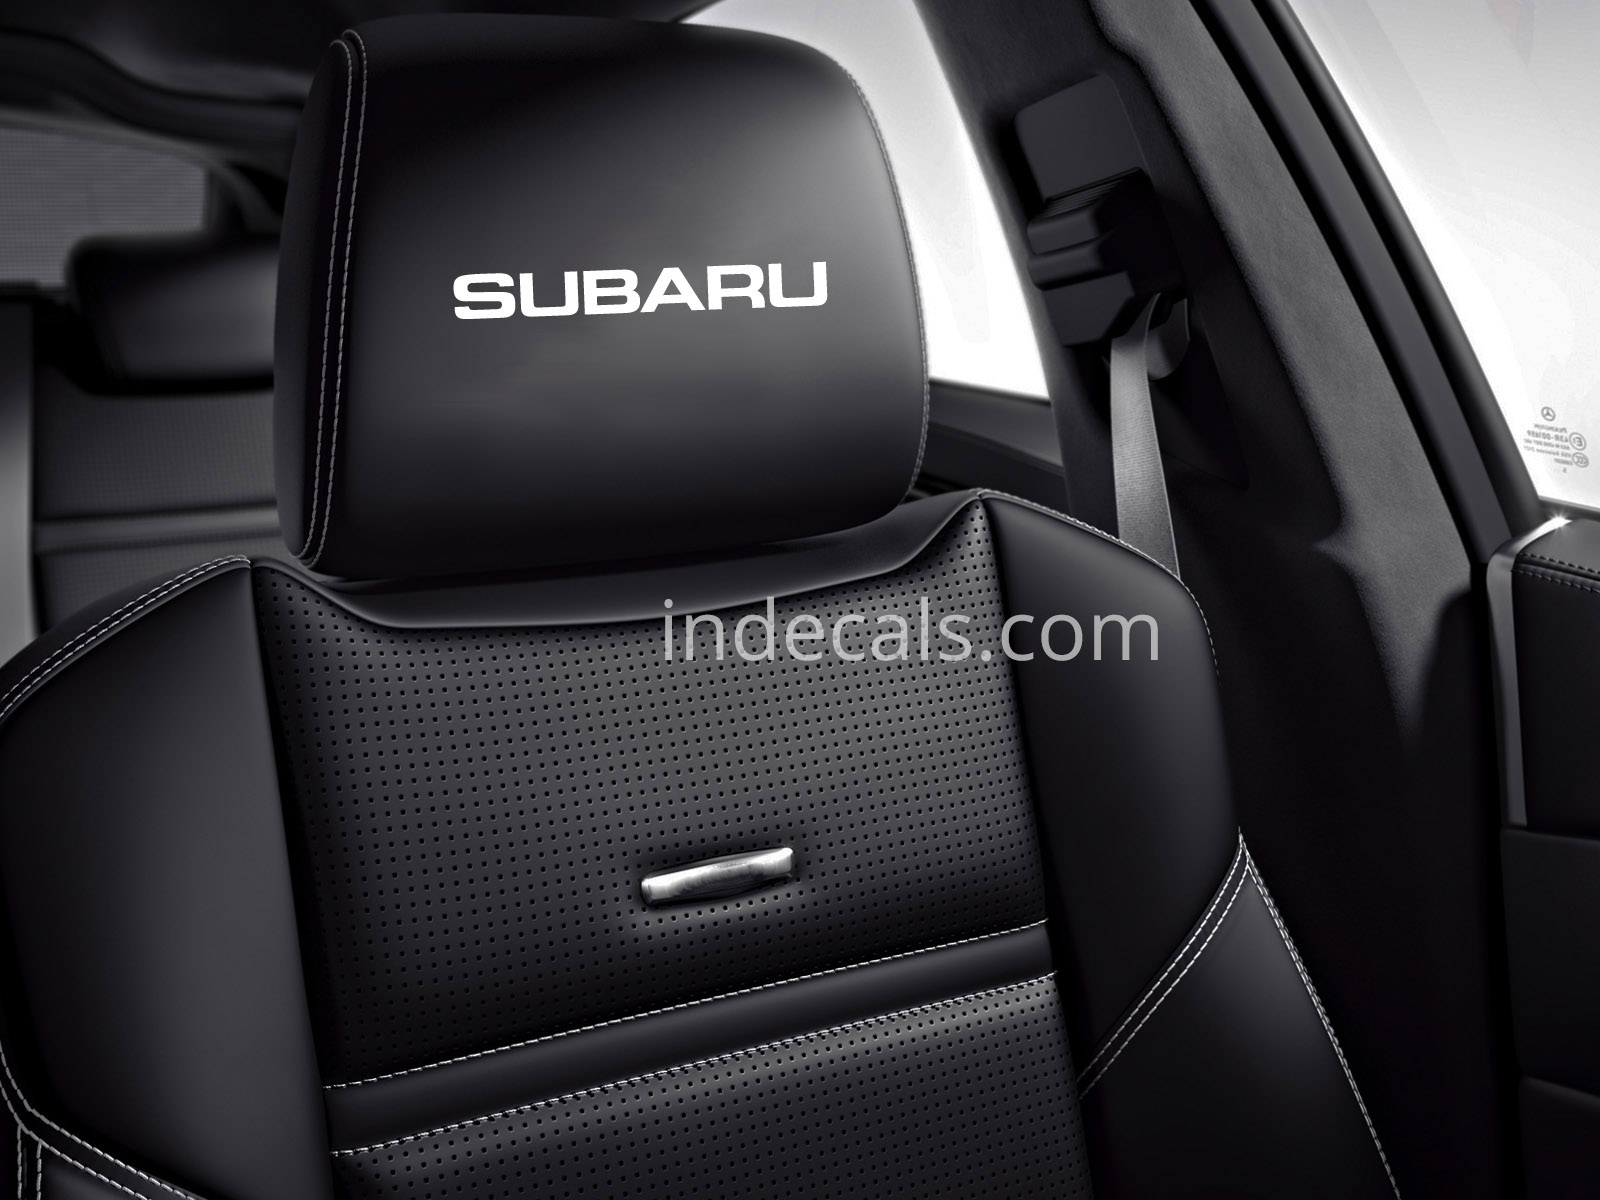 6 x Subaru Stickers for Headrests - White